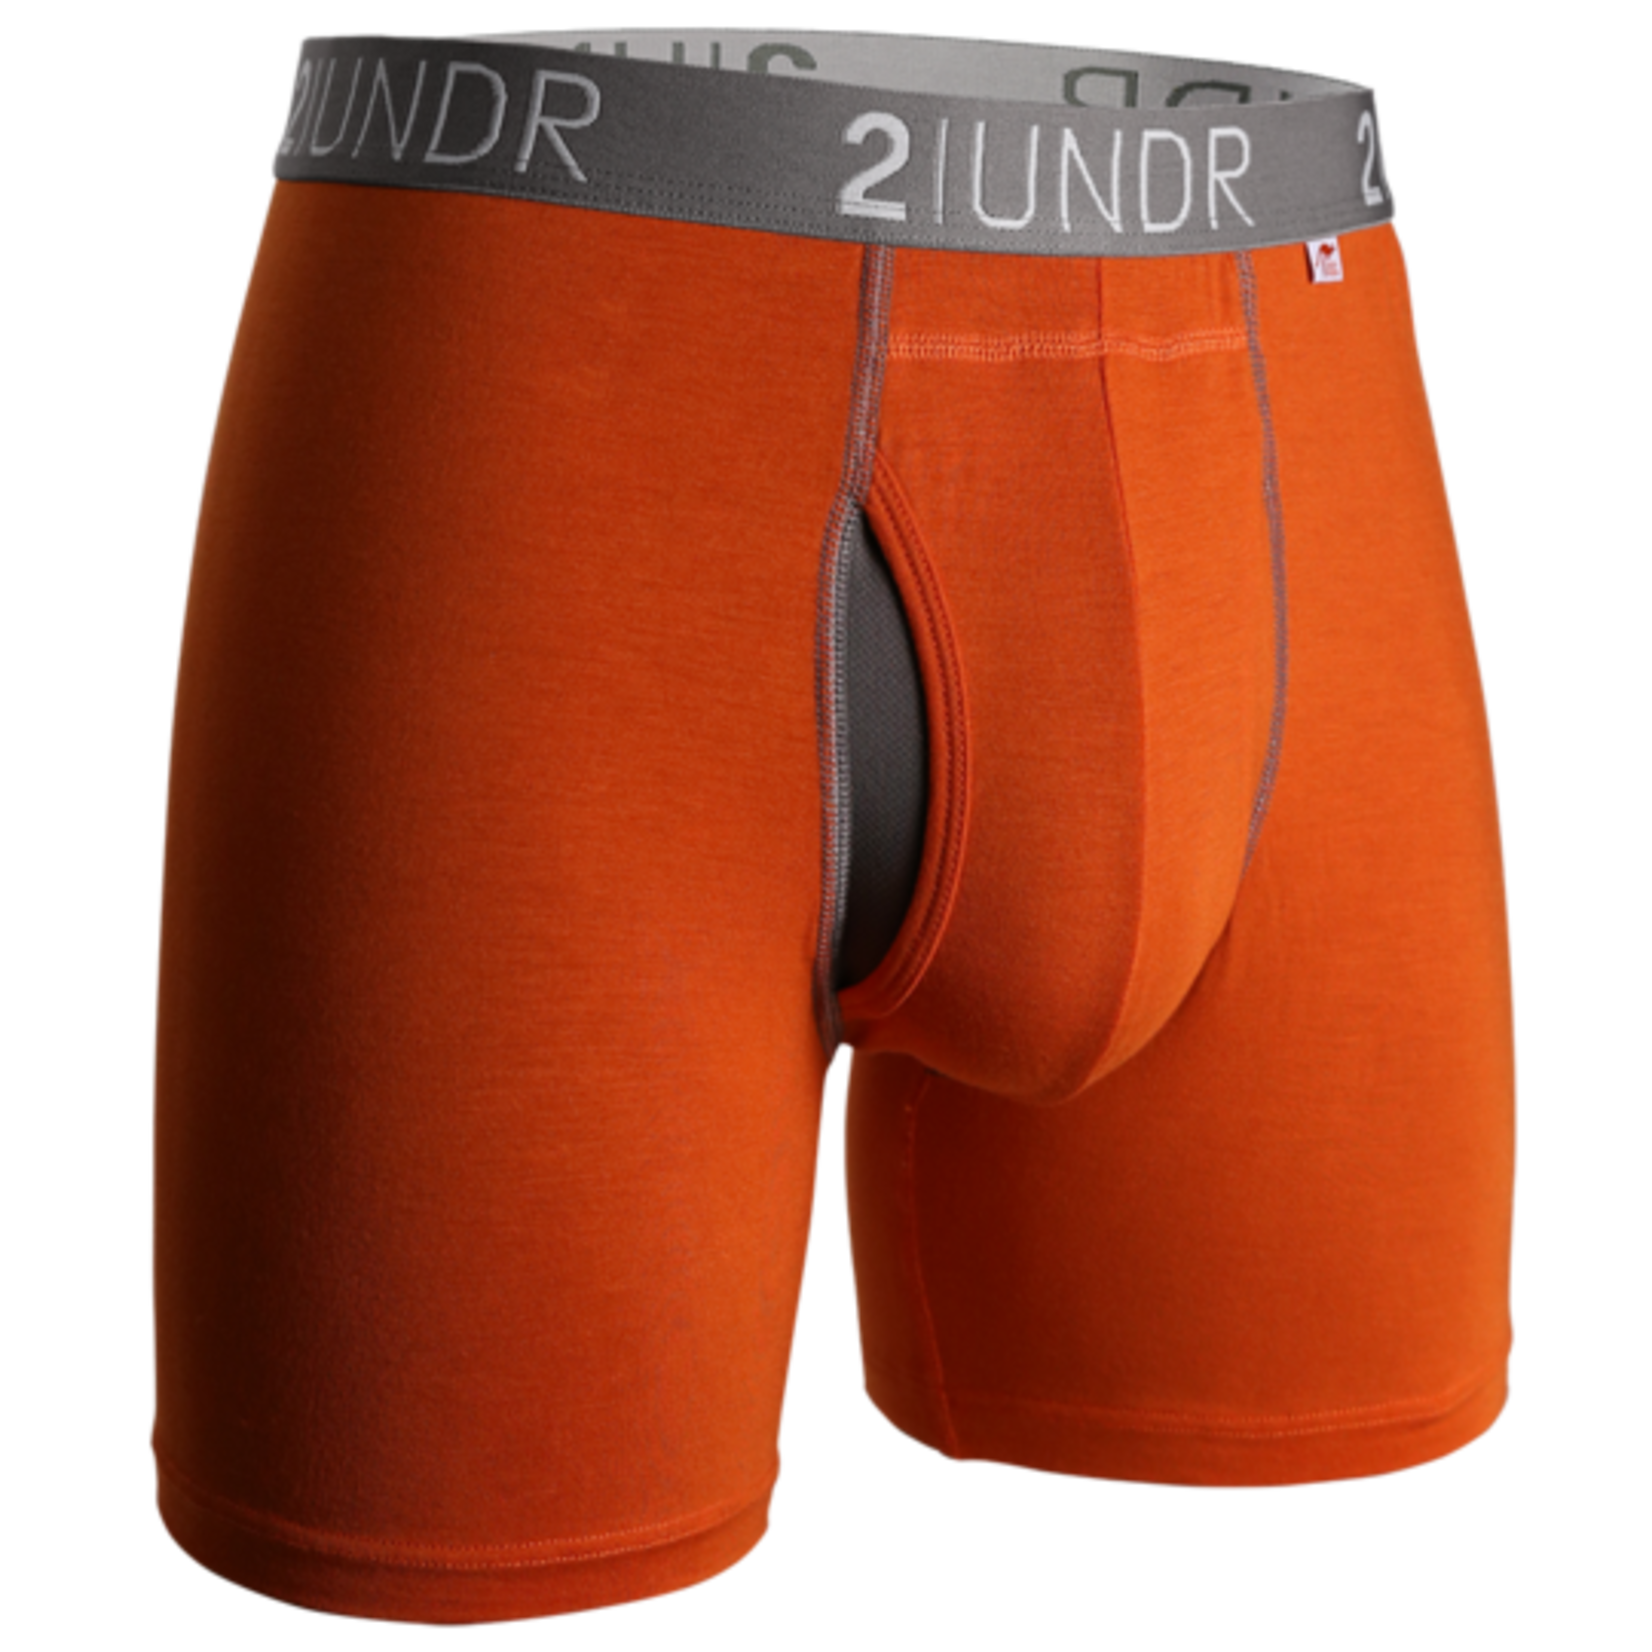 2UNDR 2UNDR's "Orange / Grey" Swing Shift Boxer Brief